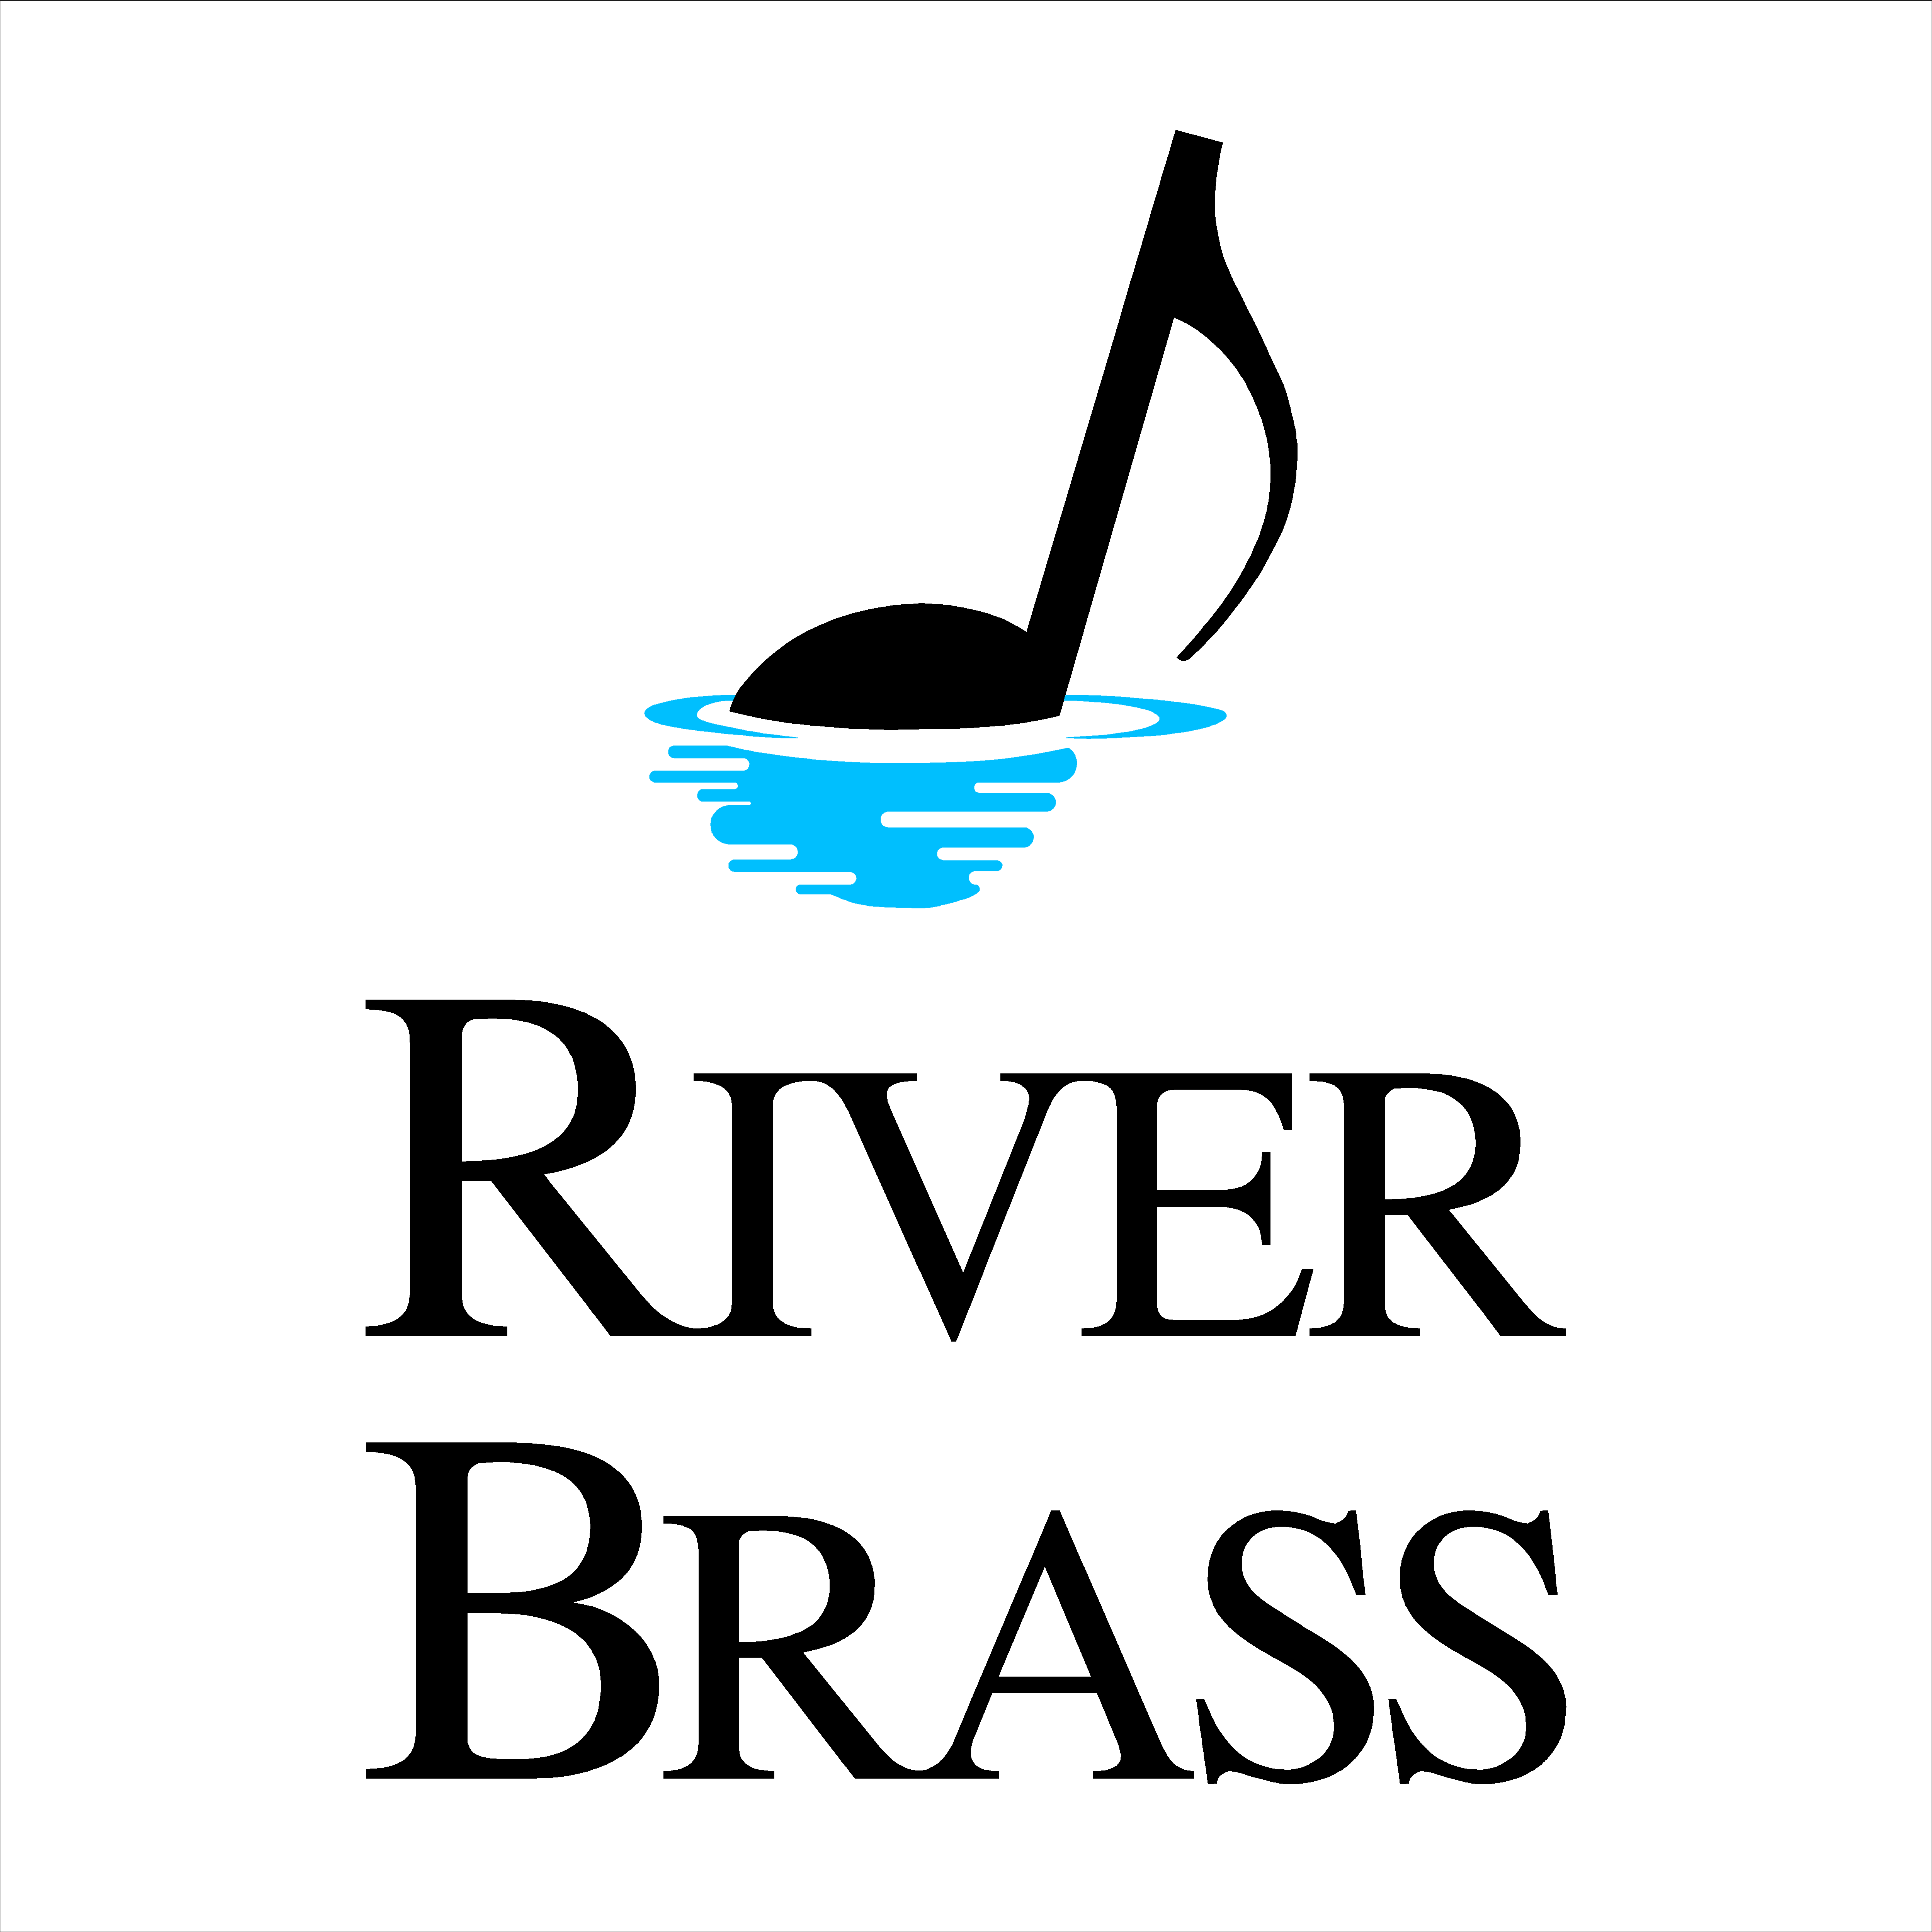 Brass Logo - File:River brass logo.png - Wikimedia Commons